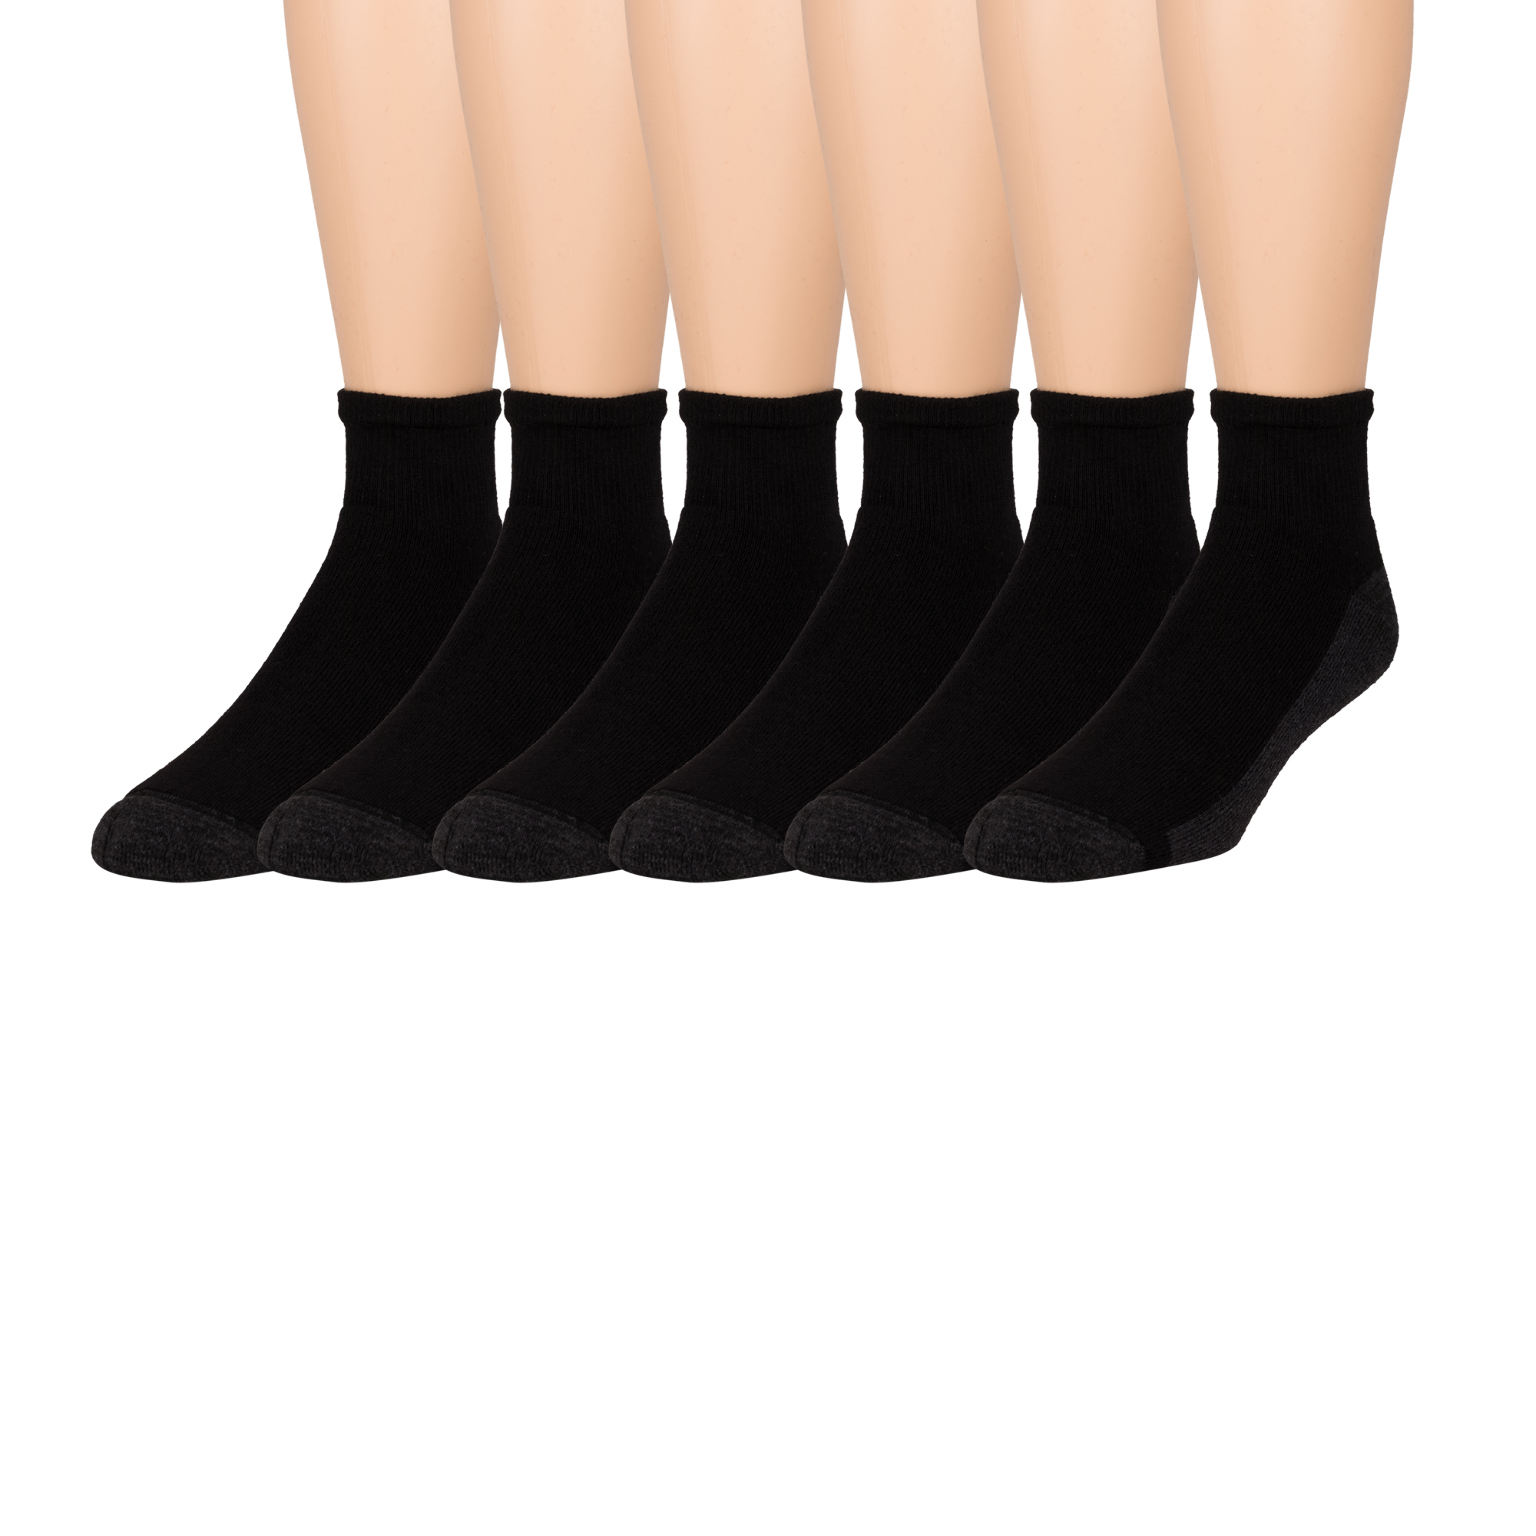 Wholesale Hanes Slightly Imperfect Men's Ankle Socks - Black